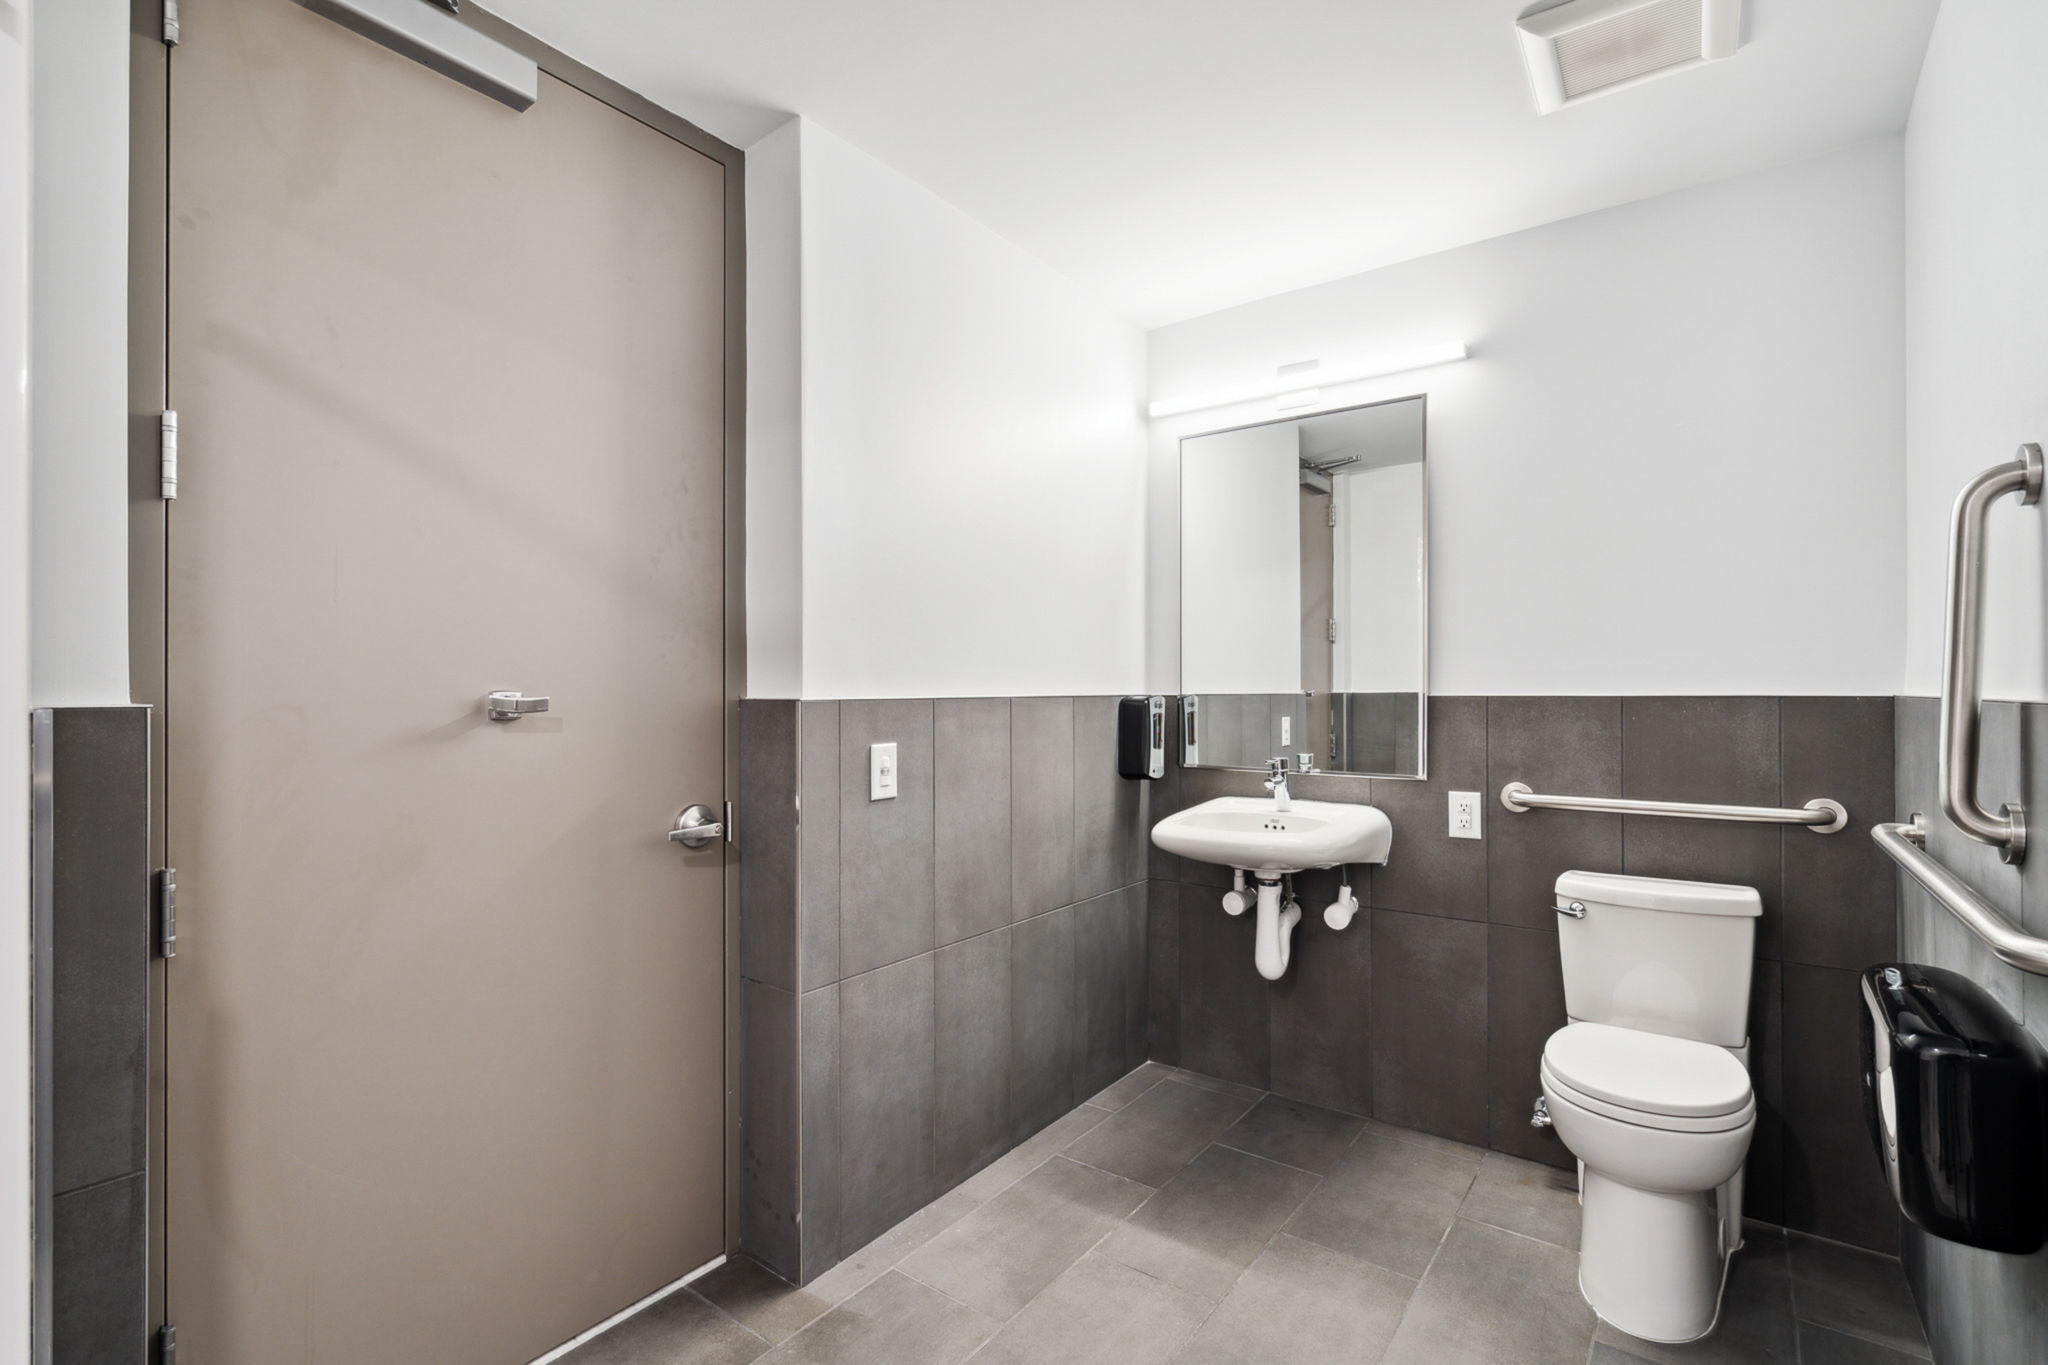 Accessible bathroom. Modern tile. Upgraded bathroom appliances. Upgraded lighting fixtures. 